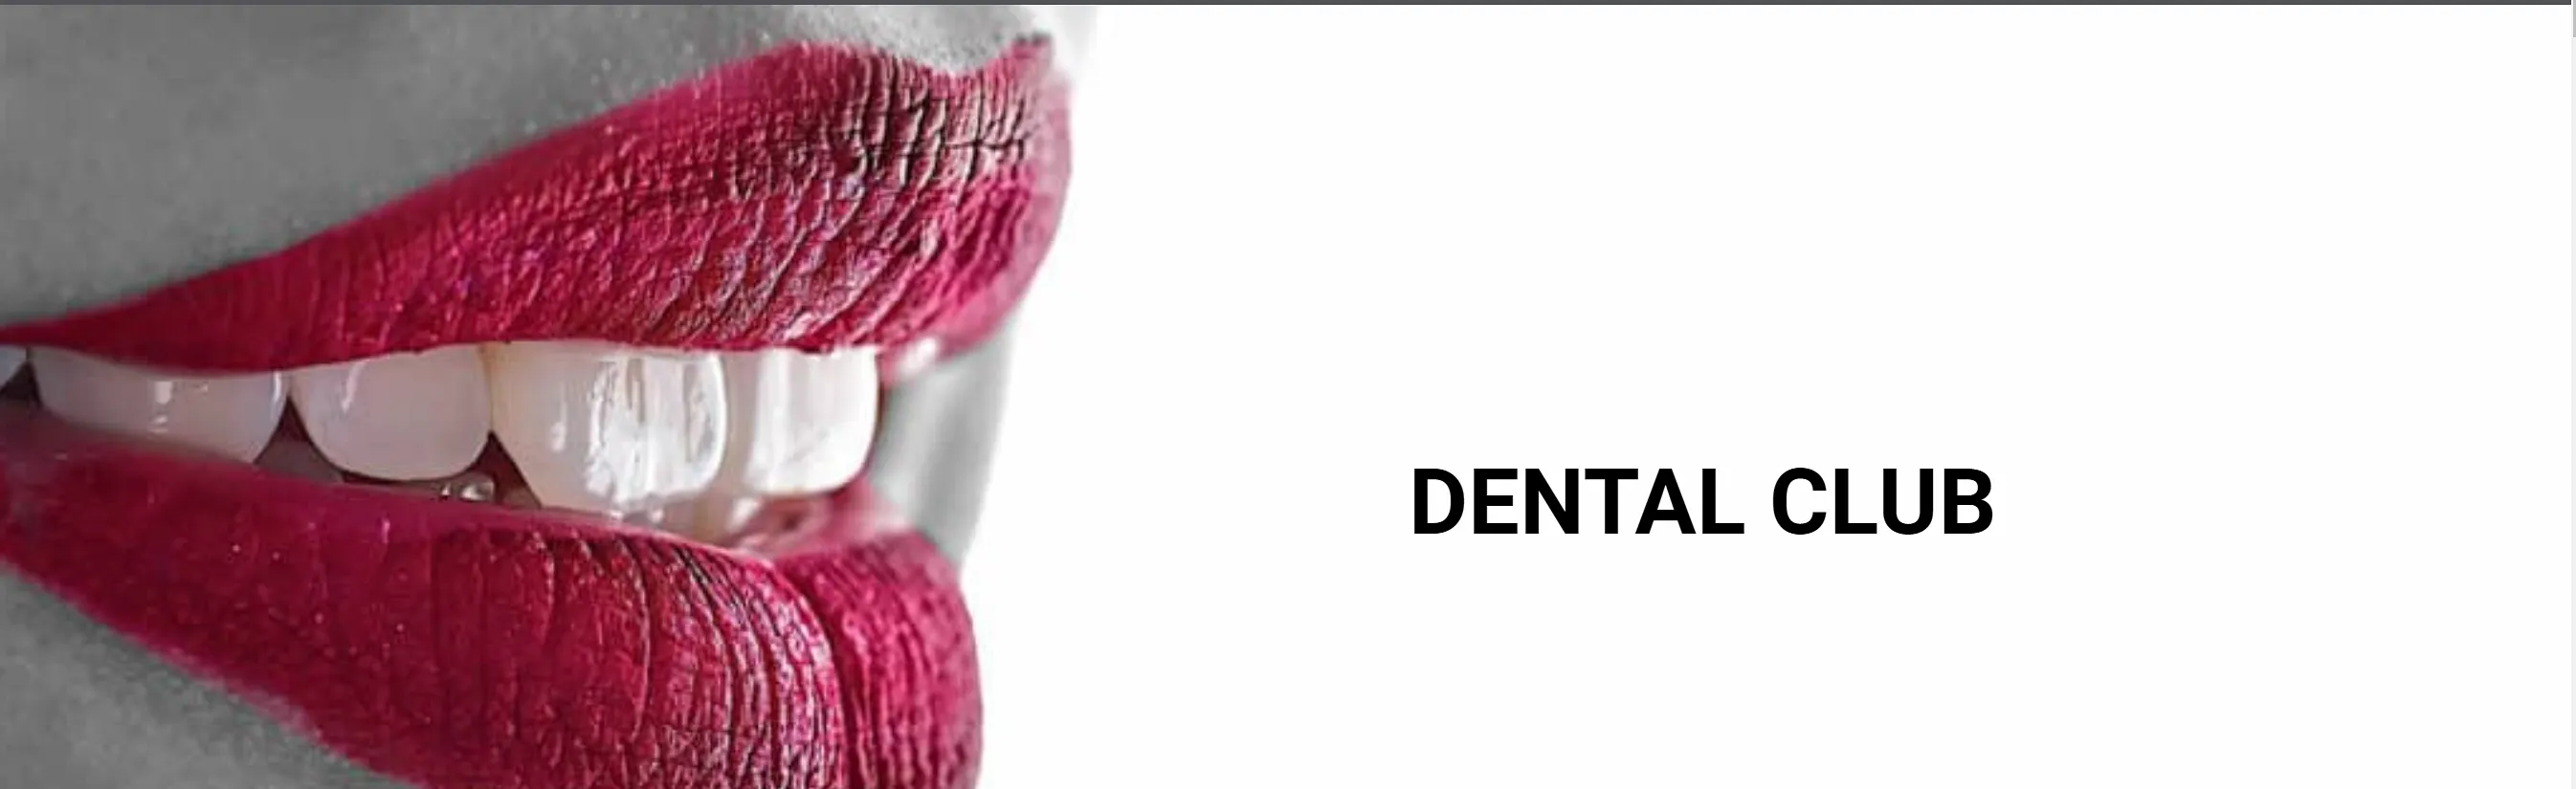 Zahnarztpraxis Dental-Club